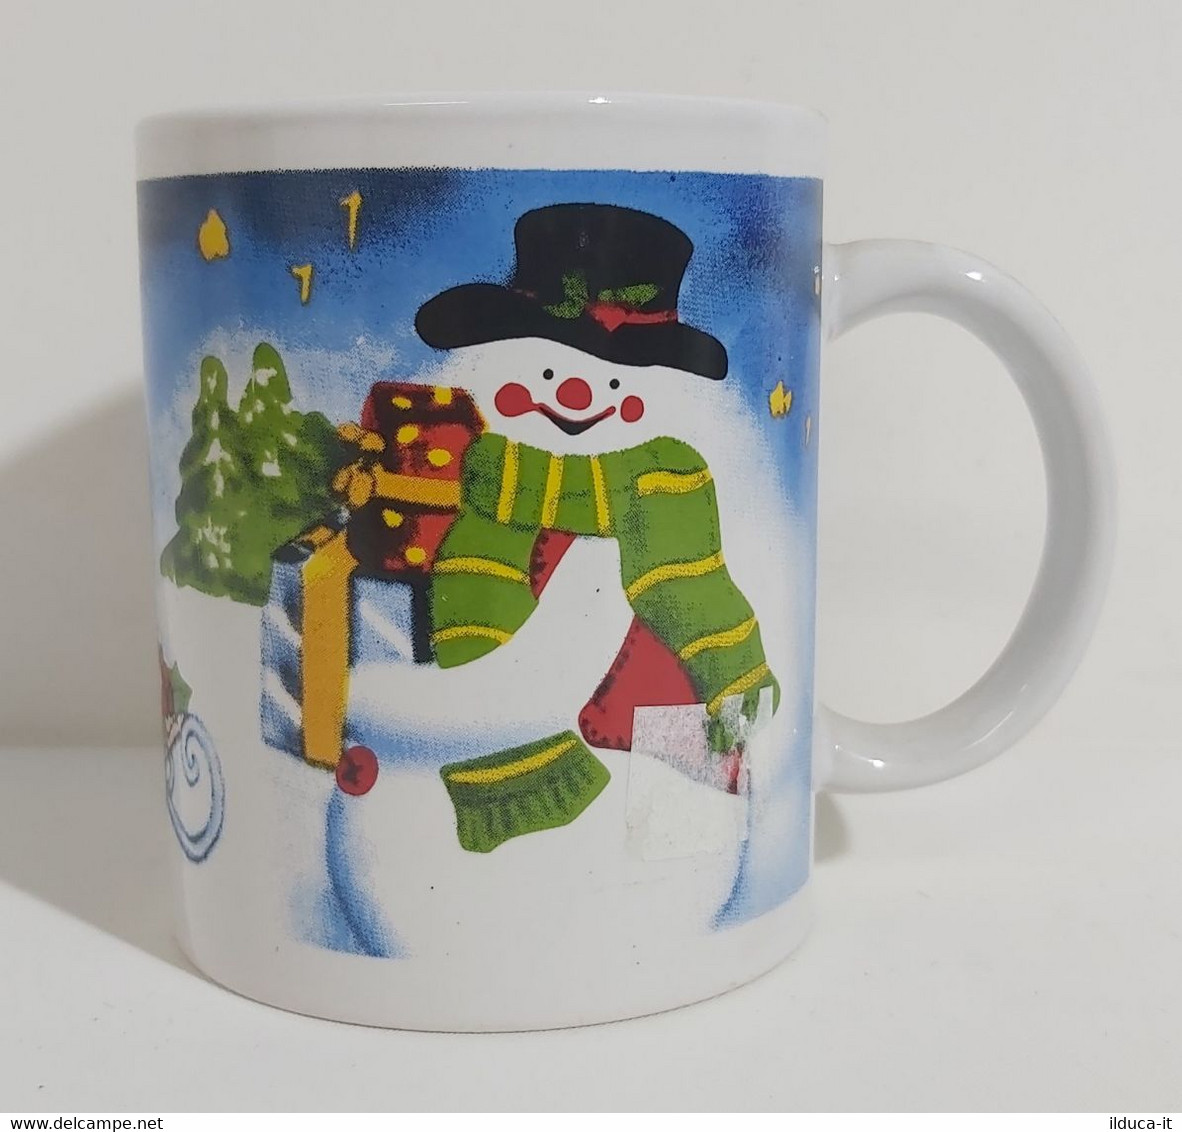 02434 Tazza (Mug) In Ceramica - Natalizia - Pupazzo Di Neve - Tazze